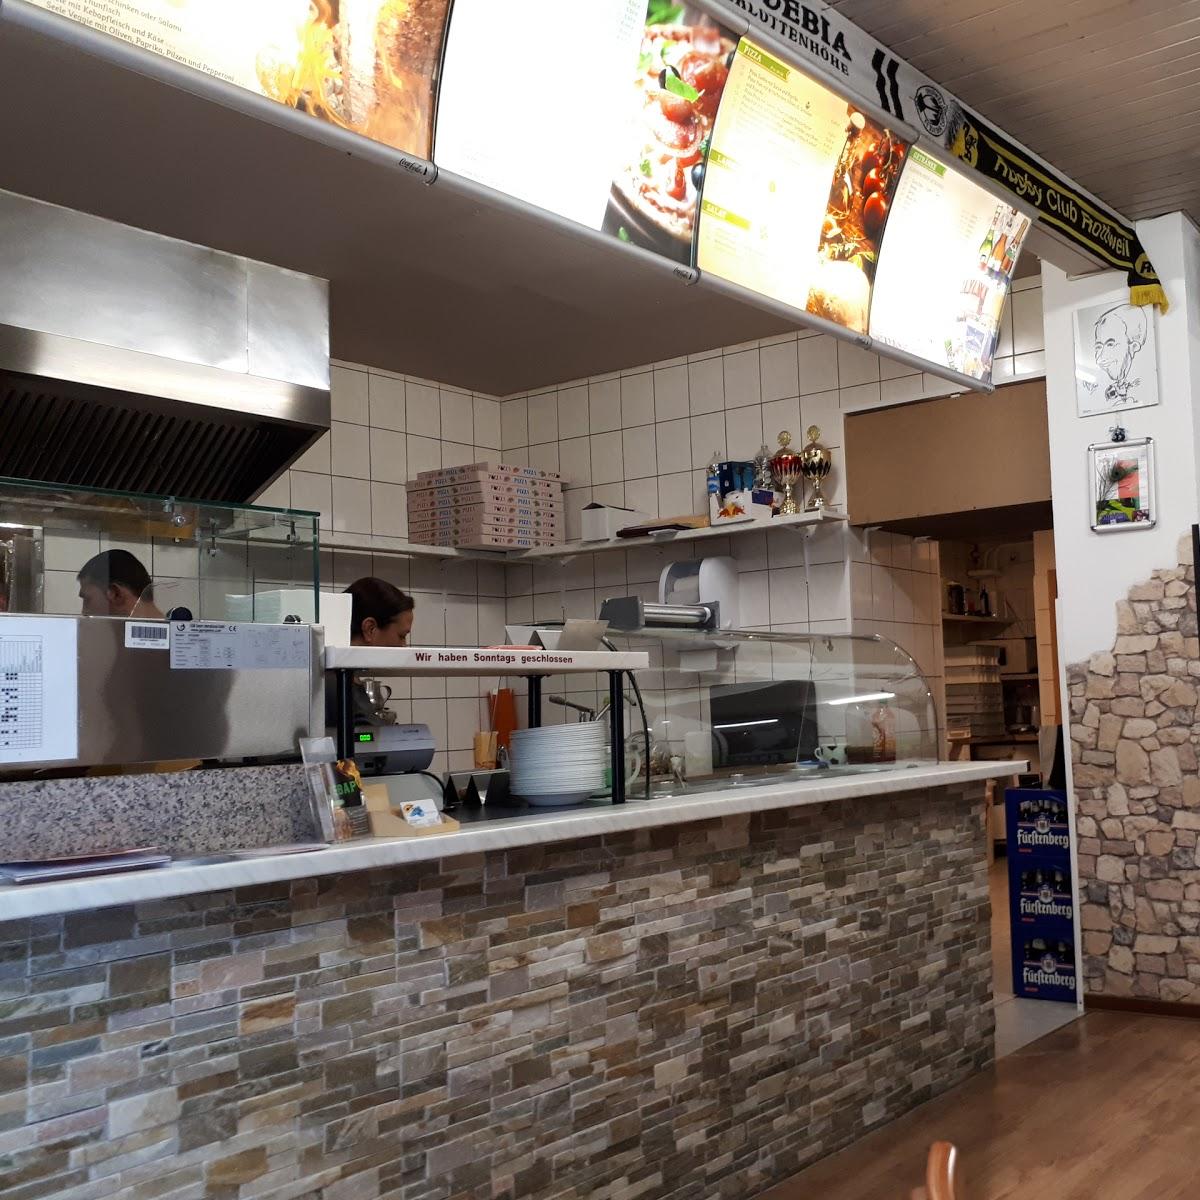 Restaurant "Imo Kebab" in  Rottweil